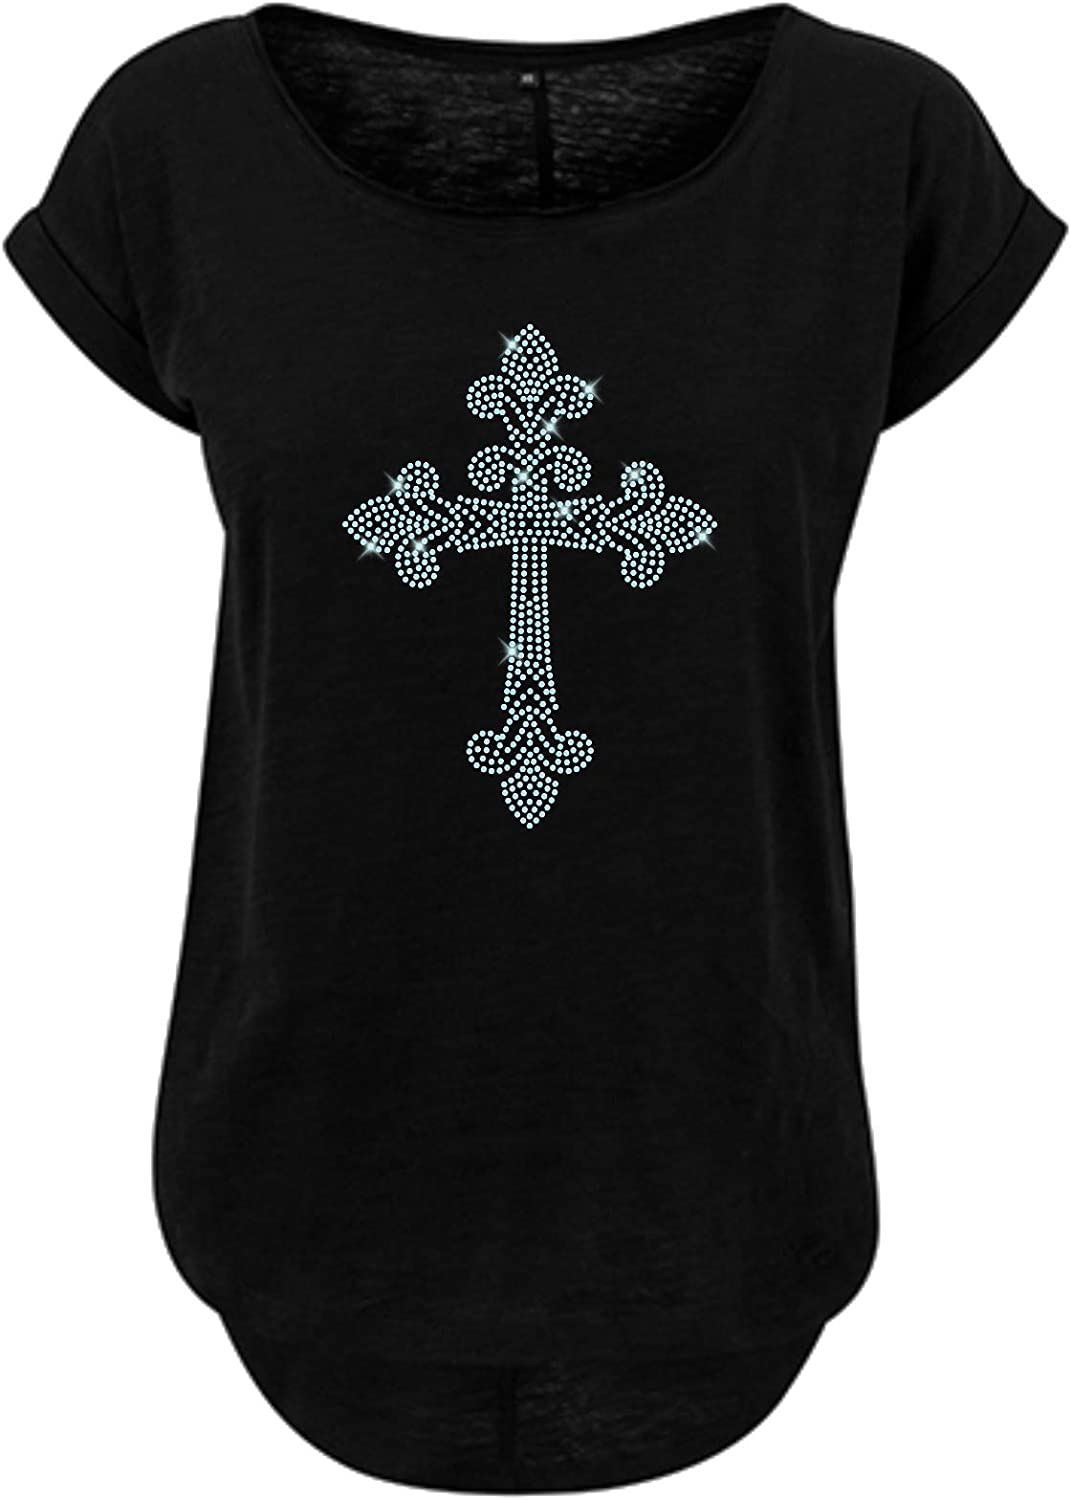 Blingeling®Damen T-Shirt mit hellblauem Strass Kreuz-Motiv